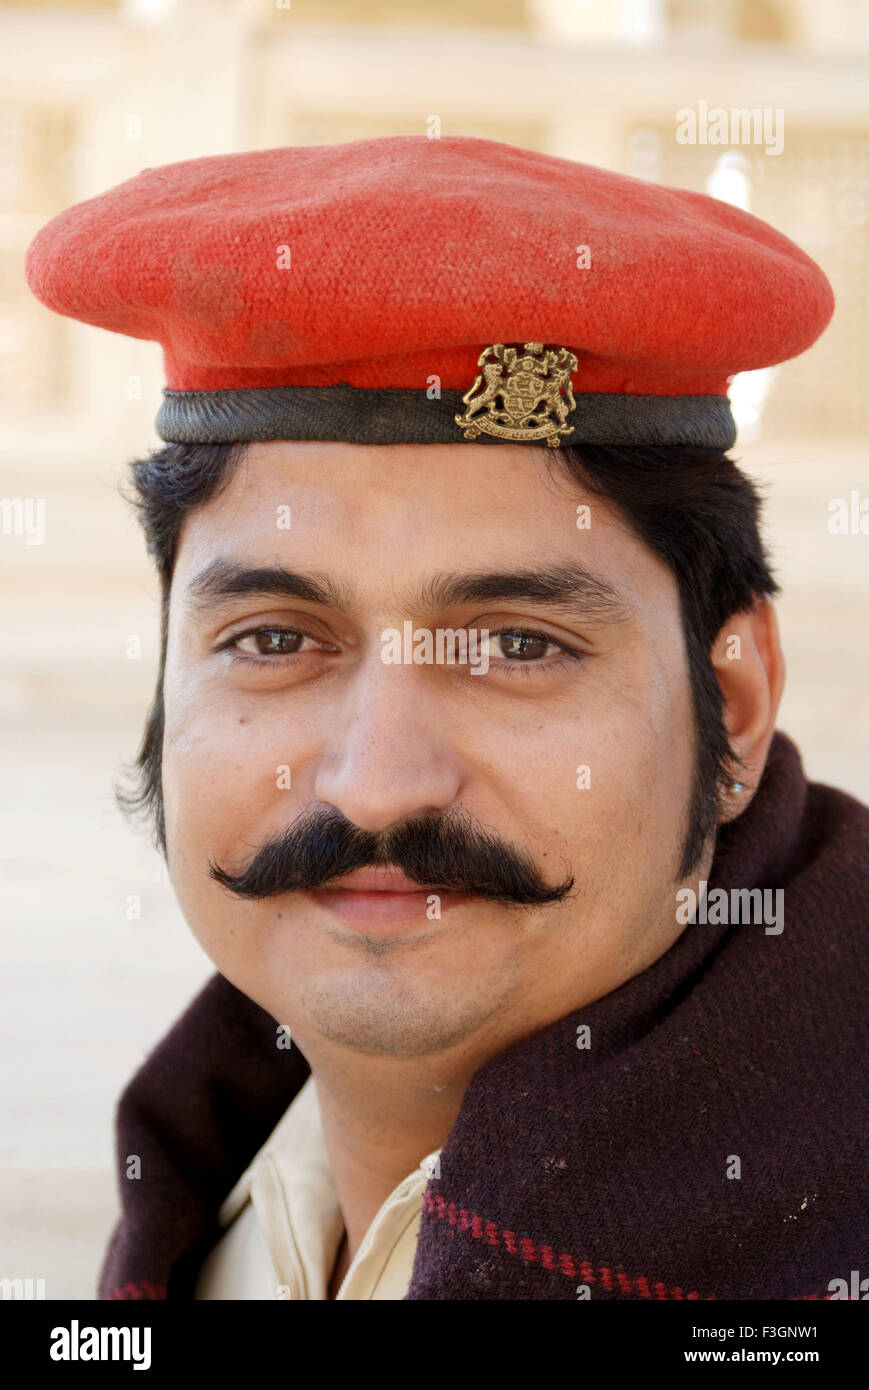 Indian man wearing beret cap ; Rajasthan ; India ; Asia ; MR#704 Stock  Photo - Alamy